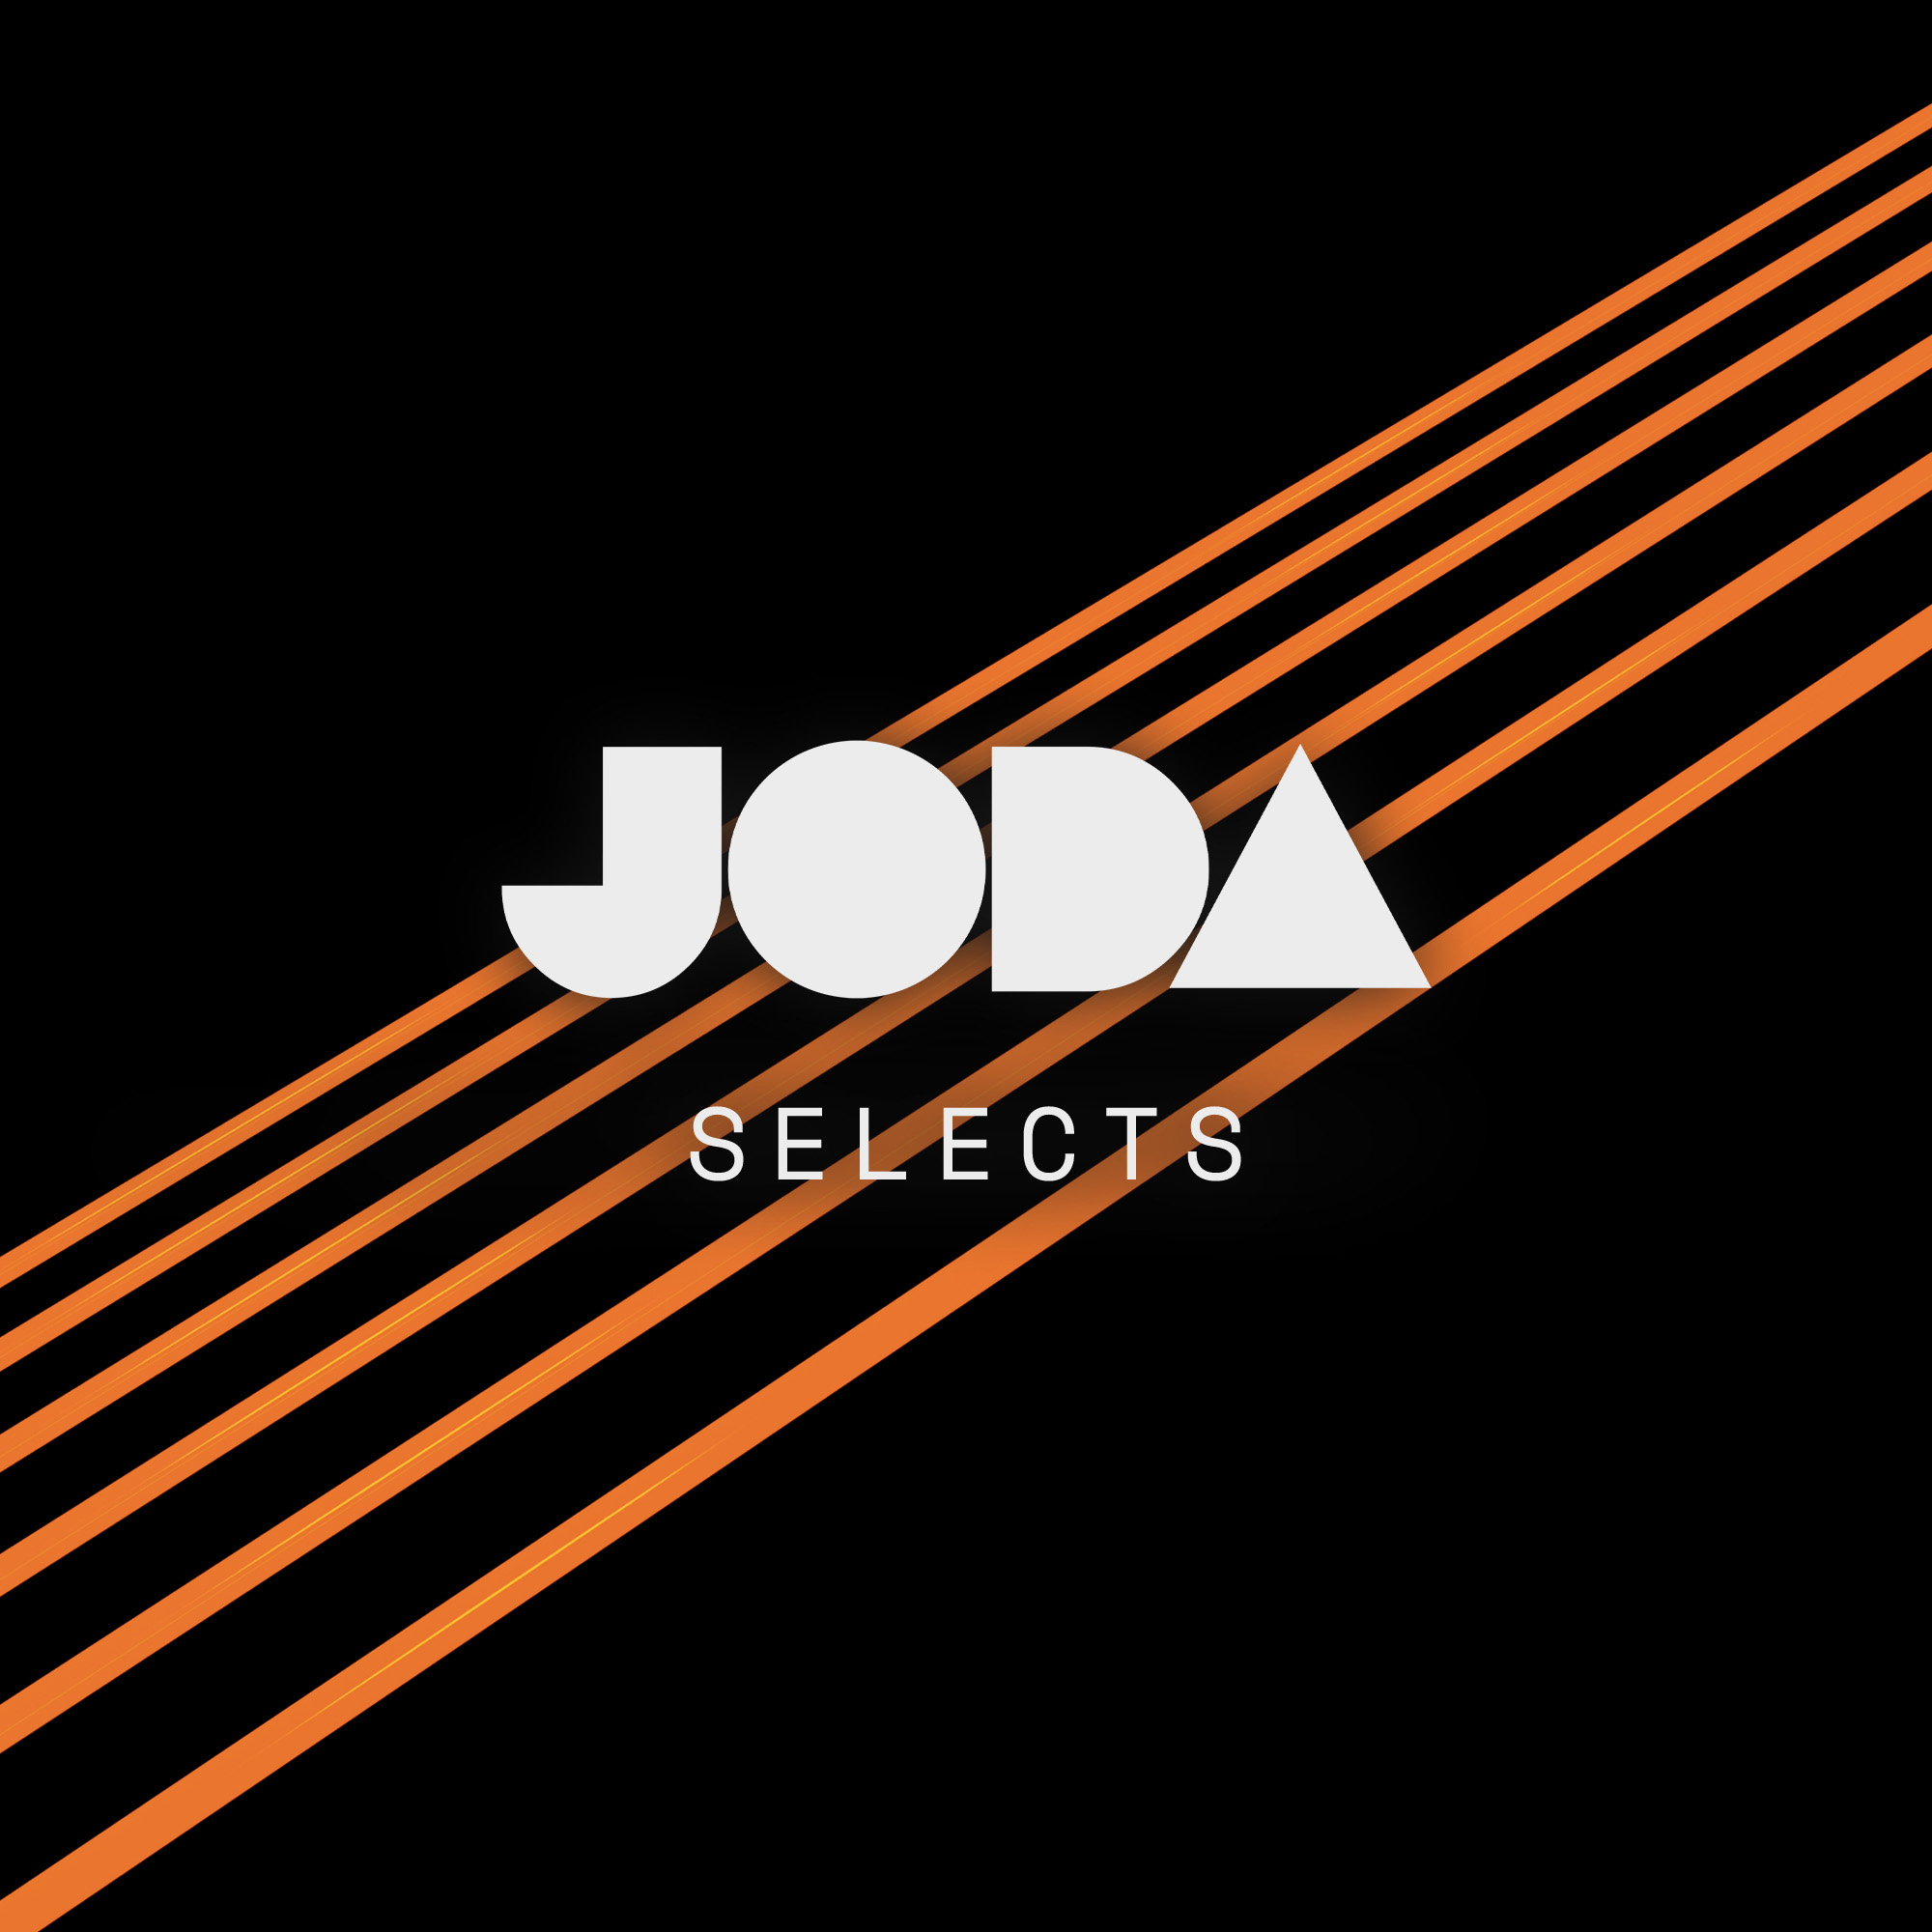 JODA Selects